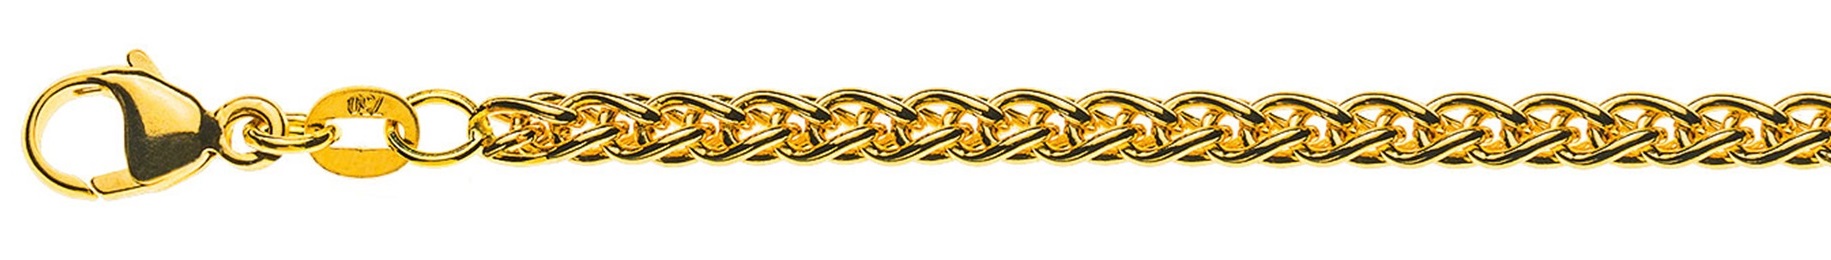 AURONOS Prestige Necklace yellow gold 18K cable chain 45cm 3.3mm